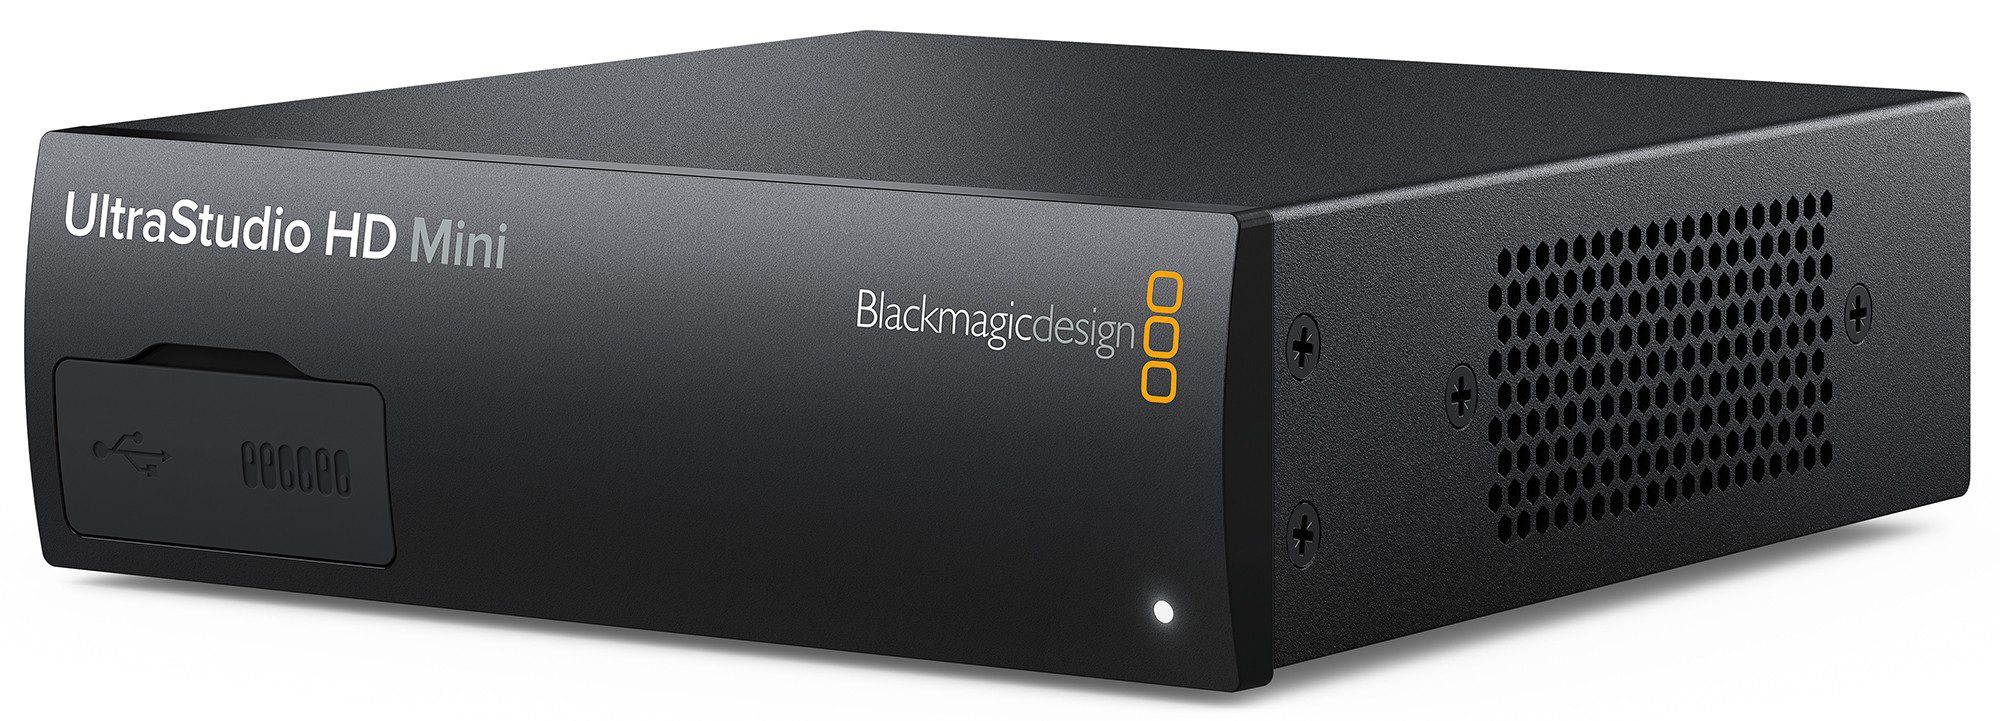 Blackmagic UltraStudio HD Mini